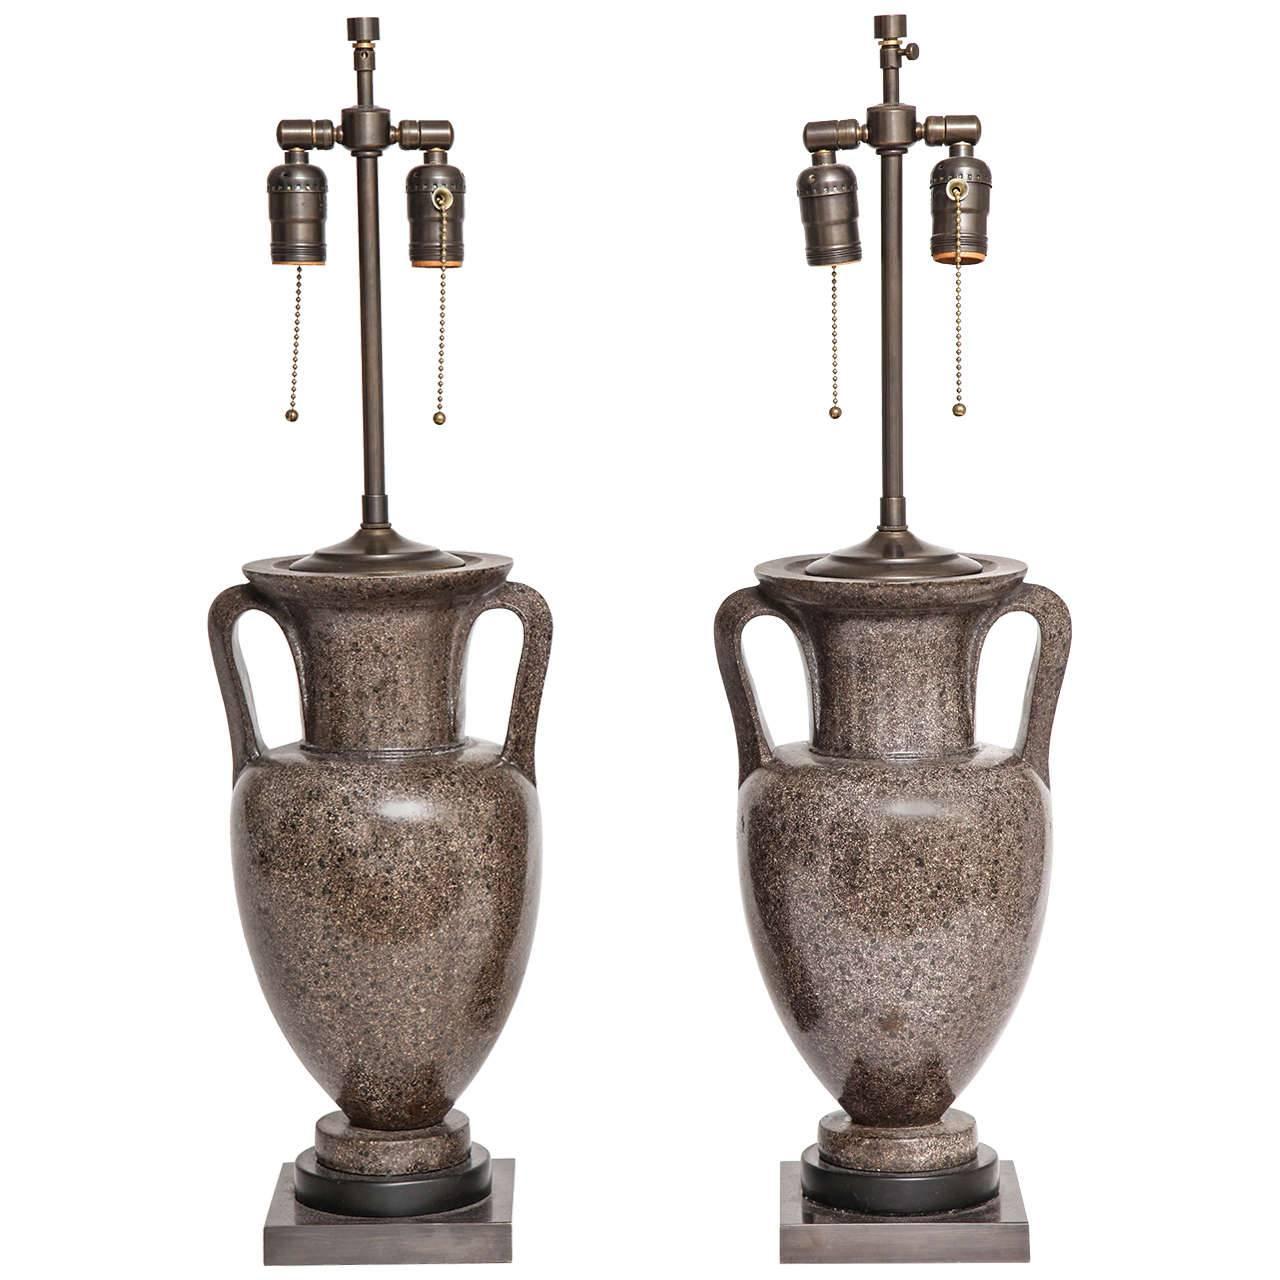 Pareja de urnas italianas de pórfido Grand Tour convertidas en lámparas, principios del siglo XIX